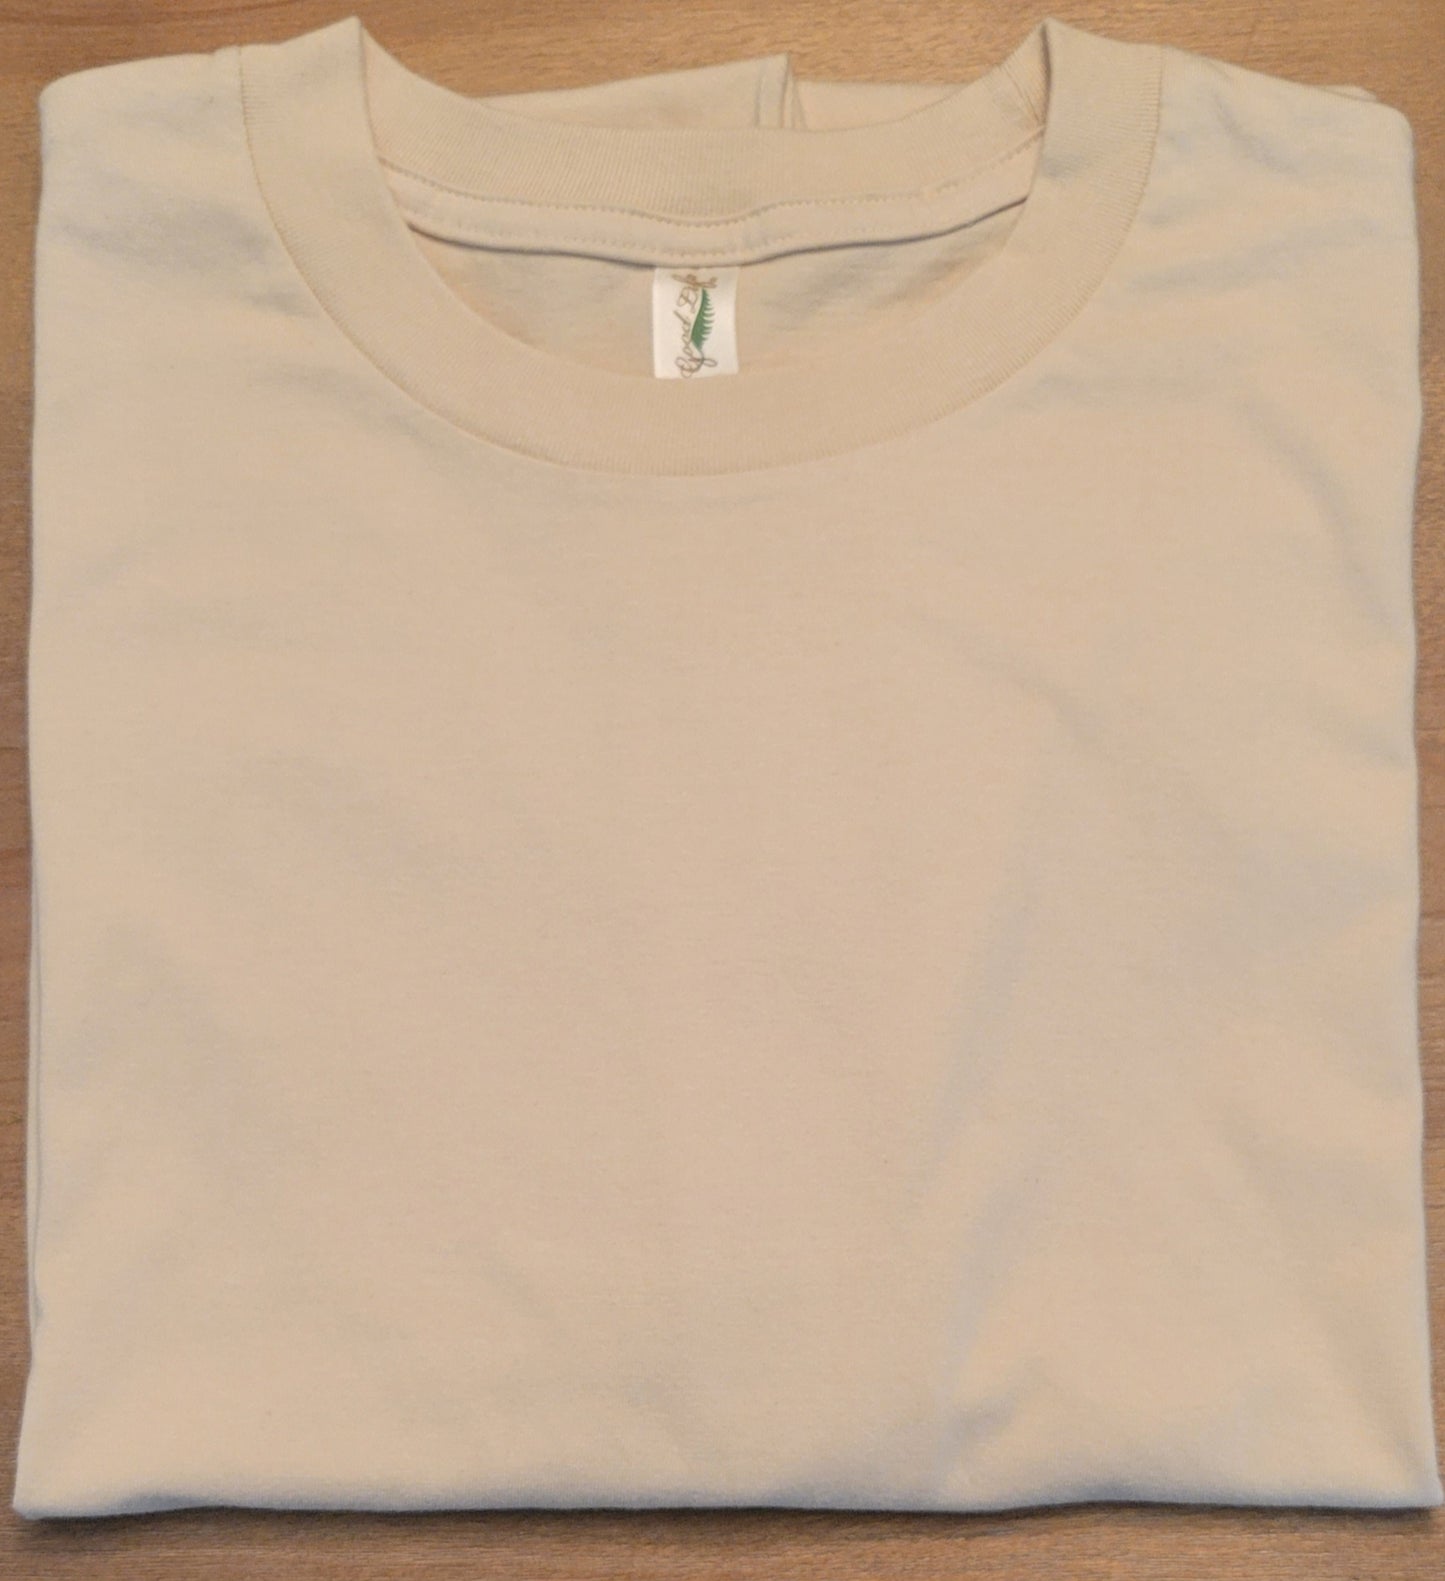 Private Label Manufacturer Bulk Mens Premium Heavy 100% Cotton 6.1 Ounce T-Shirt Bulk Wholesale Tees Hoodies USA Blank tee shirts Amazon FBA Reseller Seller Brand